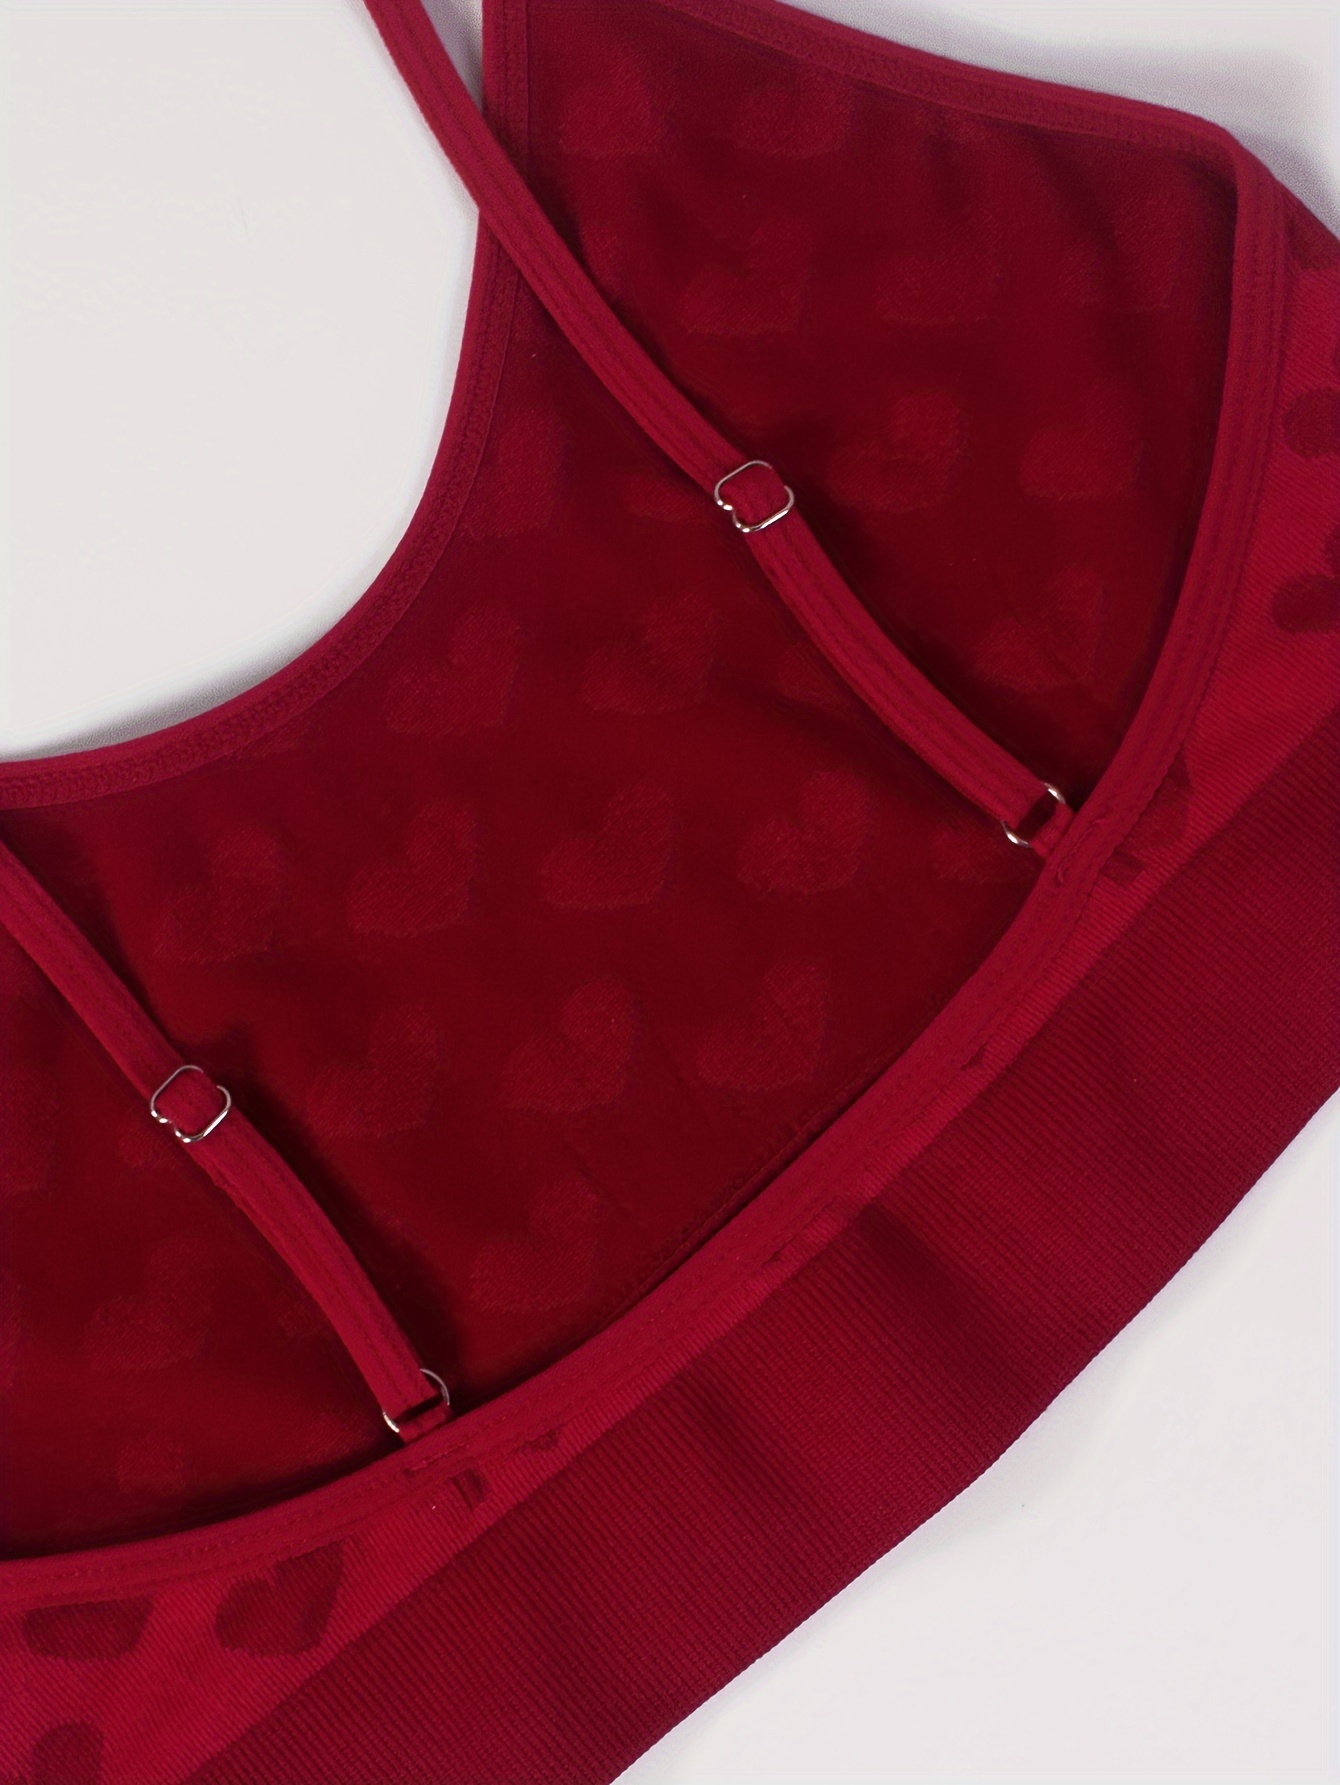 Valentine Red Nylon/Spandex Sports Bra Fabric - 1 Yard - Porcelynne  Lingerie Supplies